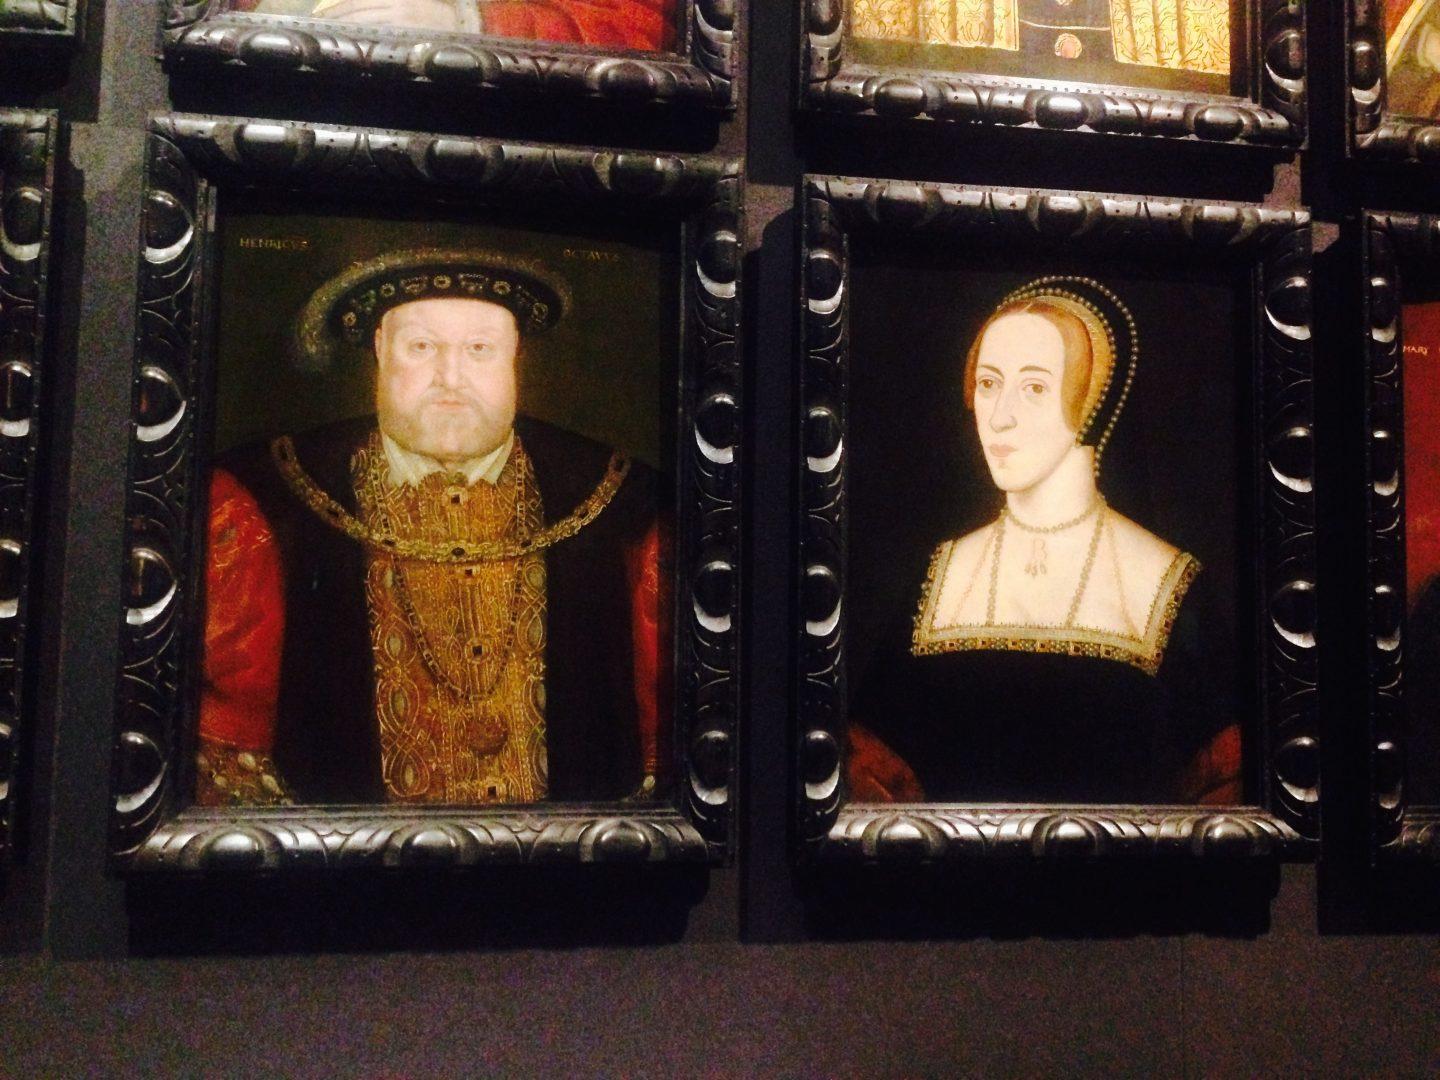 Henry VIII and Anne Boleyn at the National Portrait Gallery (PHOTO COURTESY OF MARLESSA STIVALA)